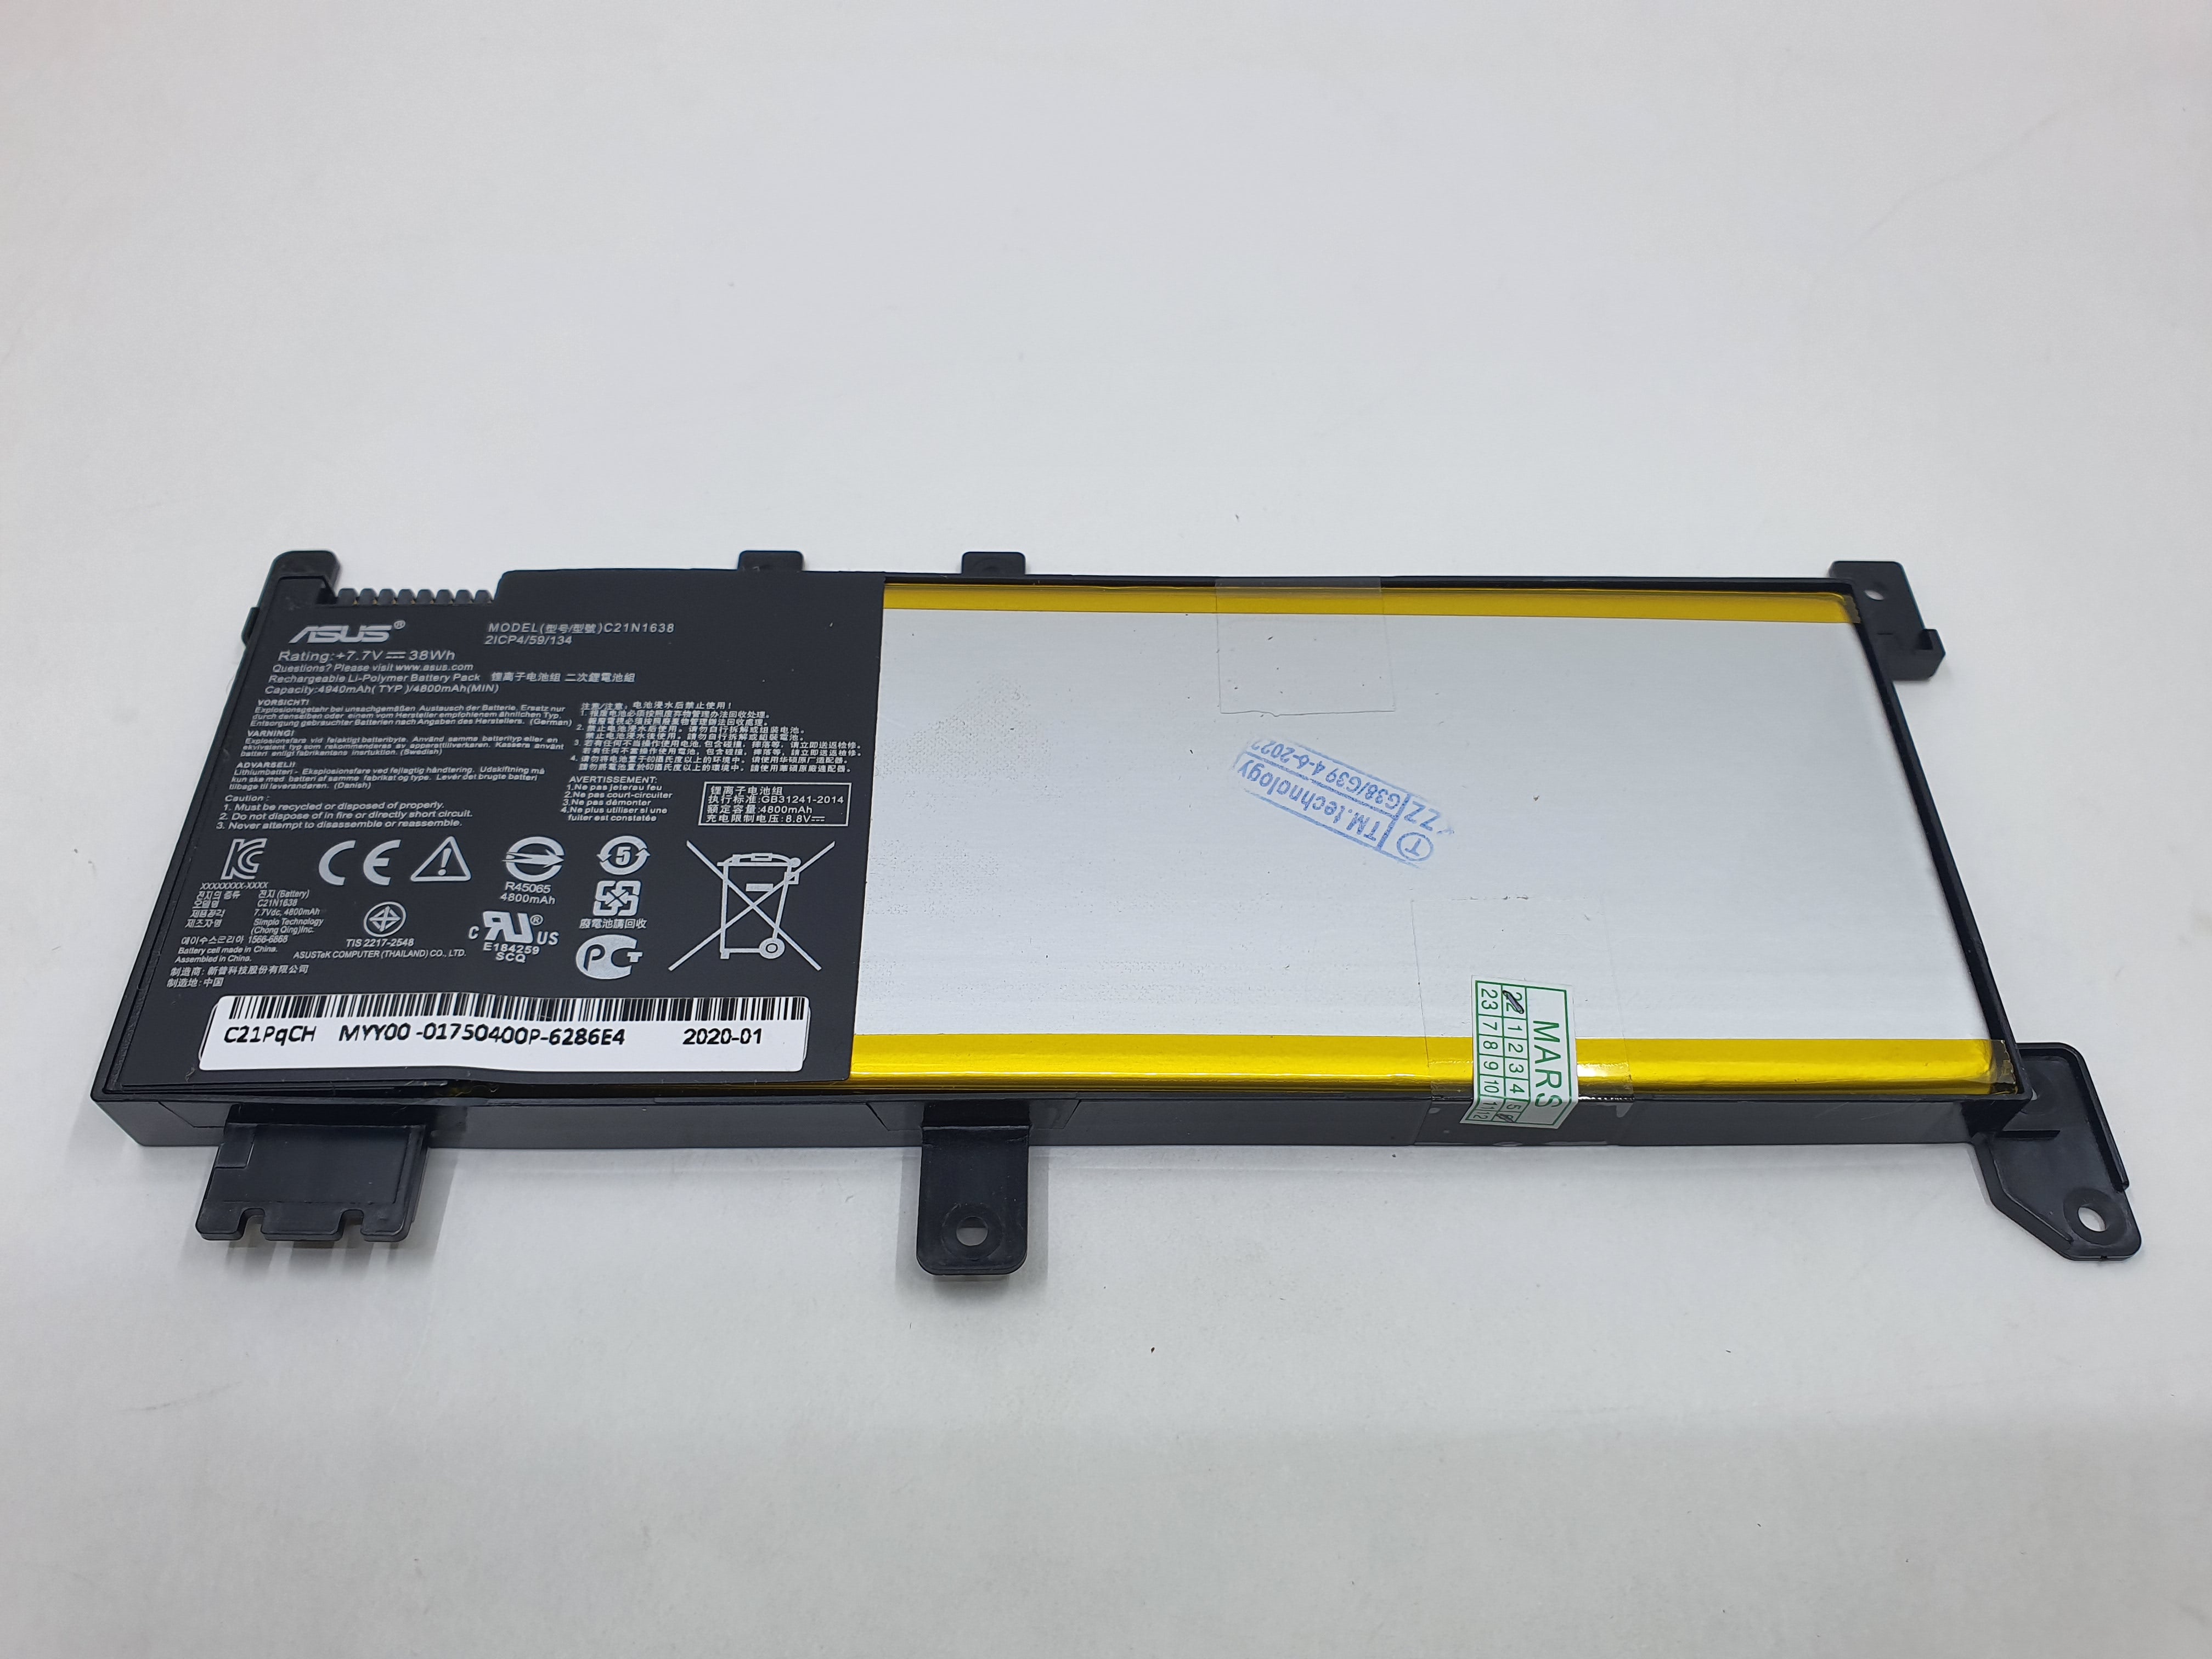 Asus Battery X442UQ A1 for Asus VivoBook 14 X442UQ